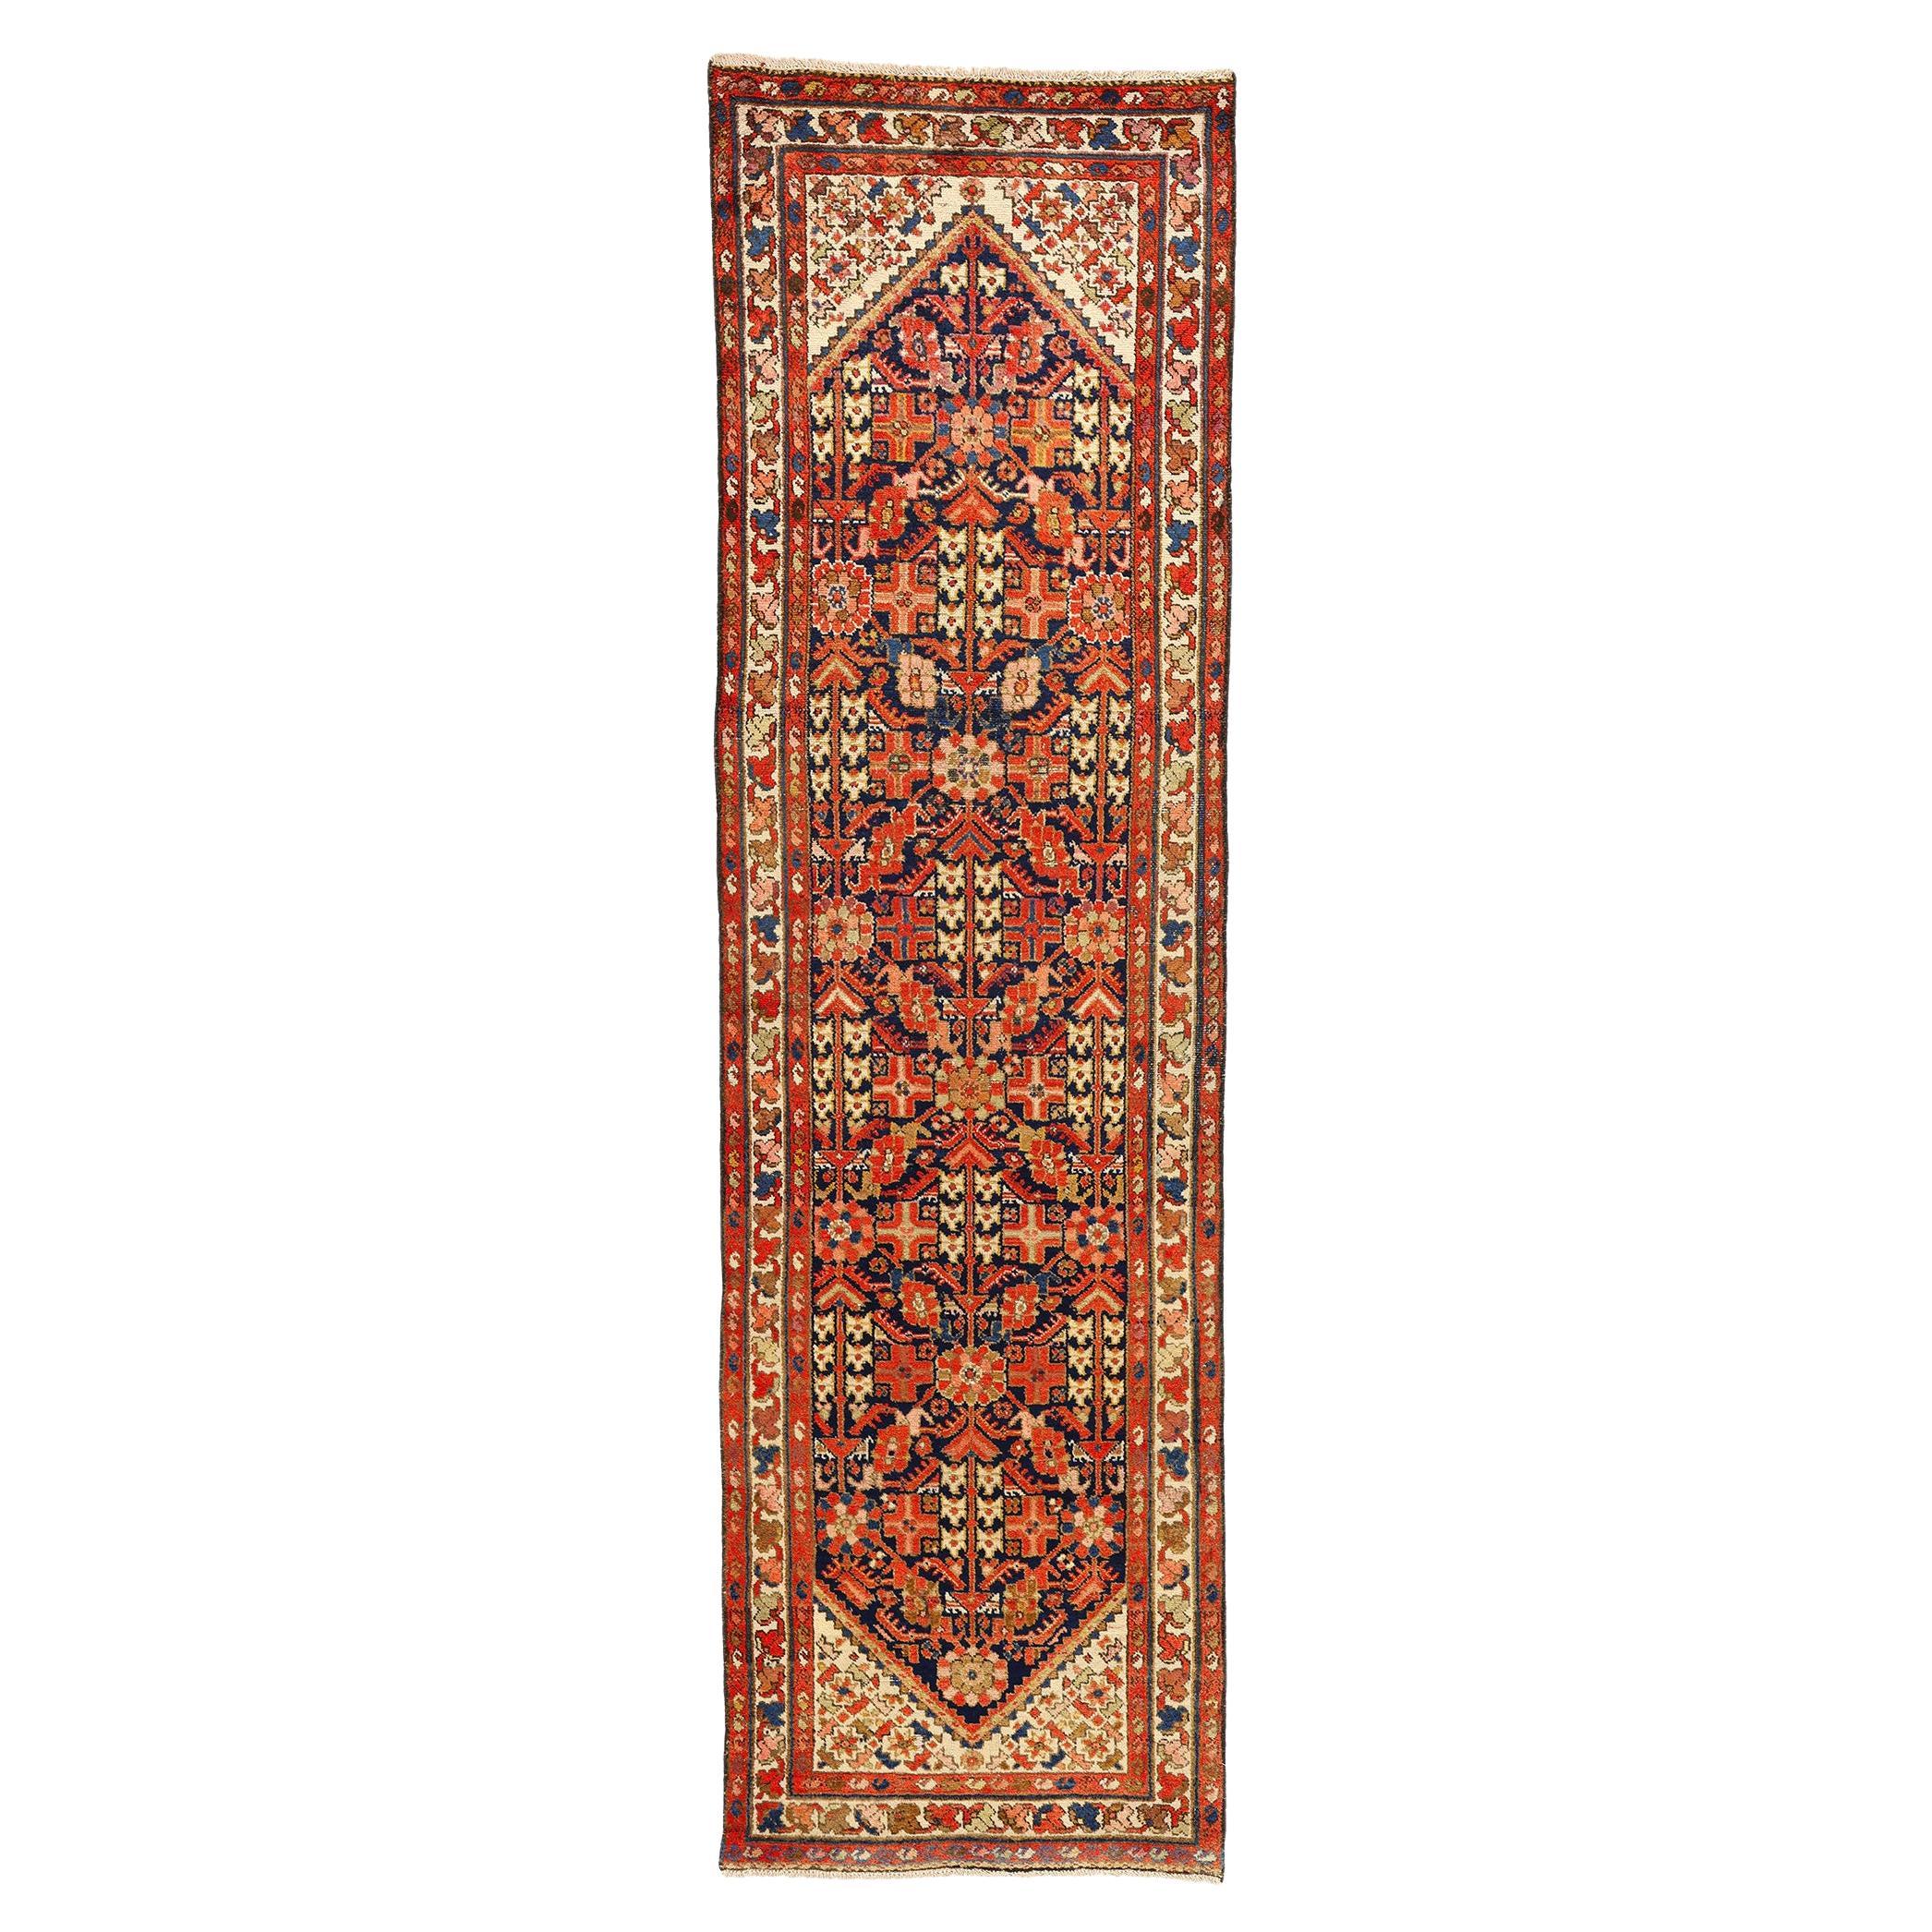 Vintage Persian Malayer Carpet with Guli Hinnai Flower